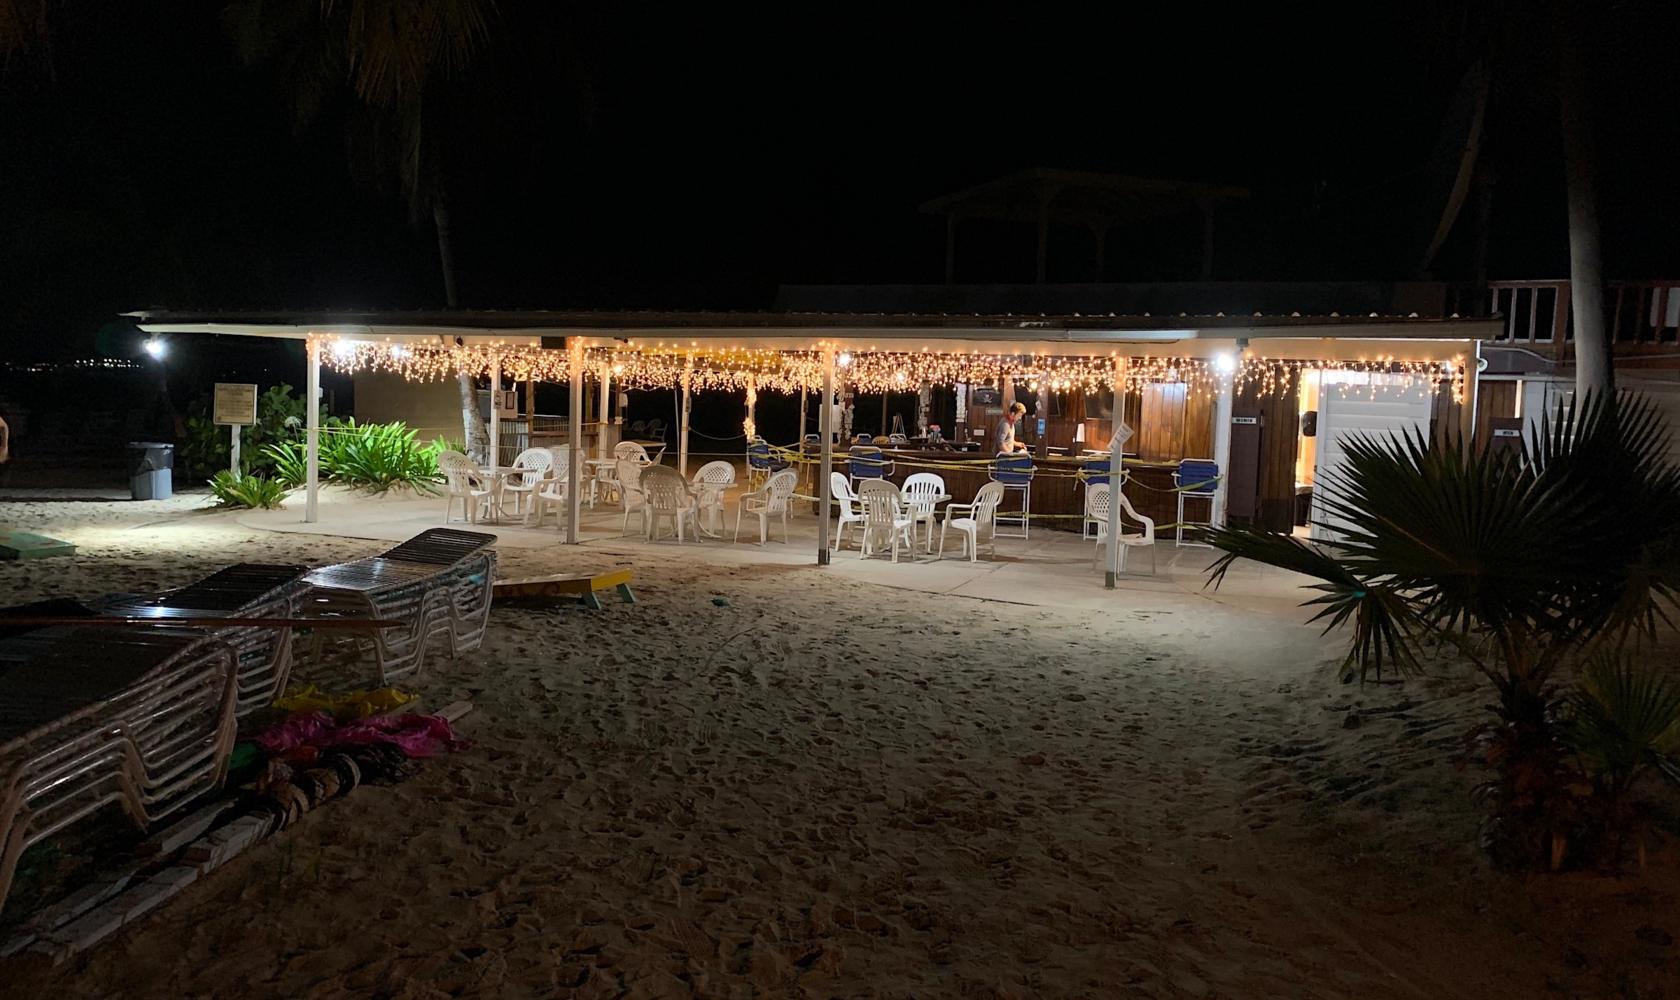 The Beach Bar at night